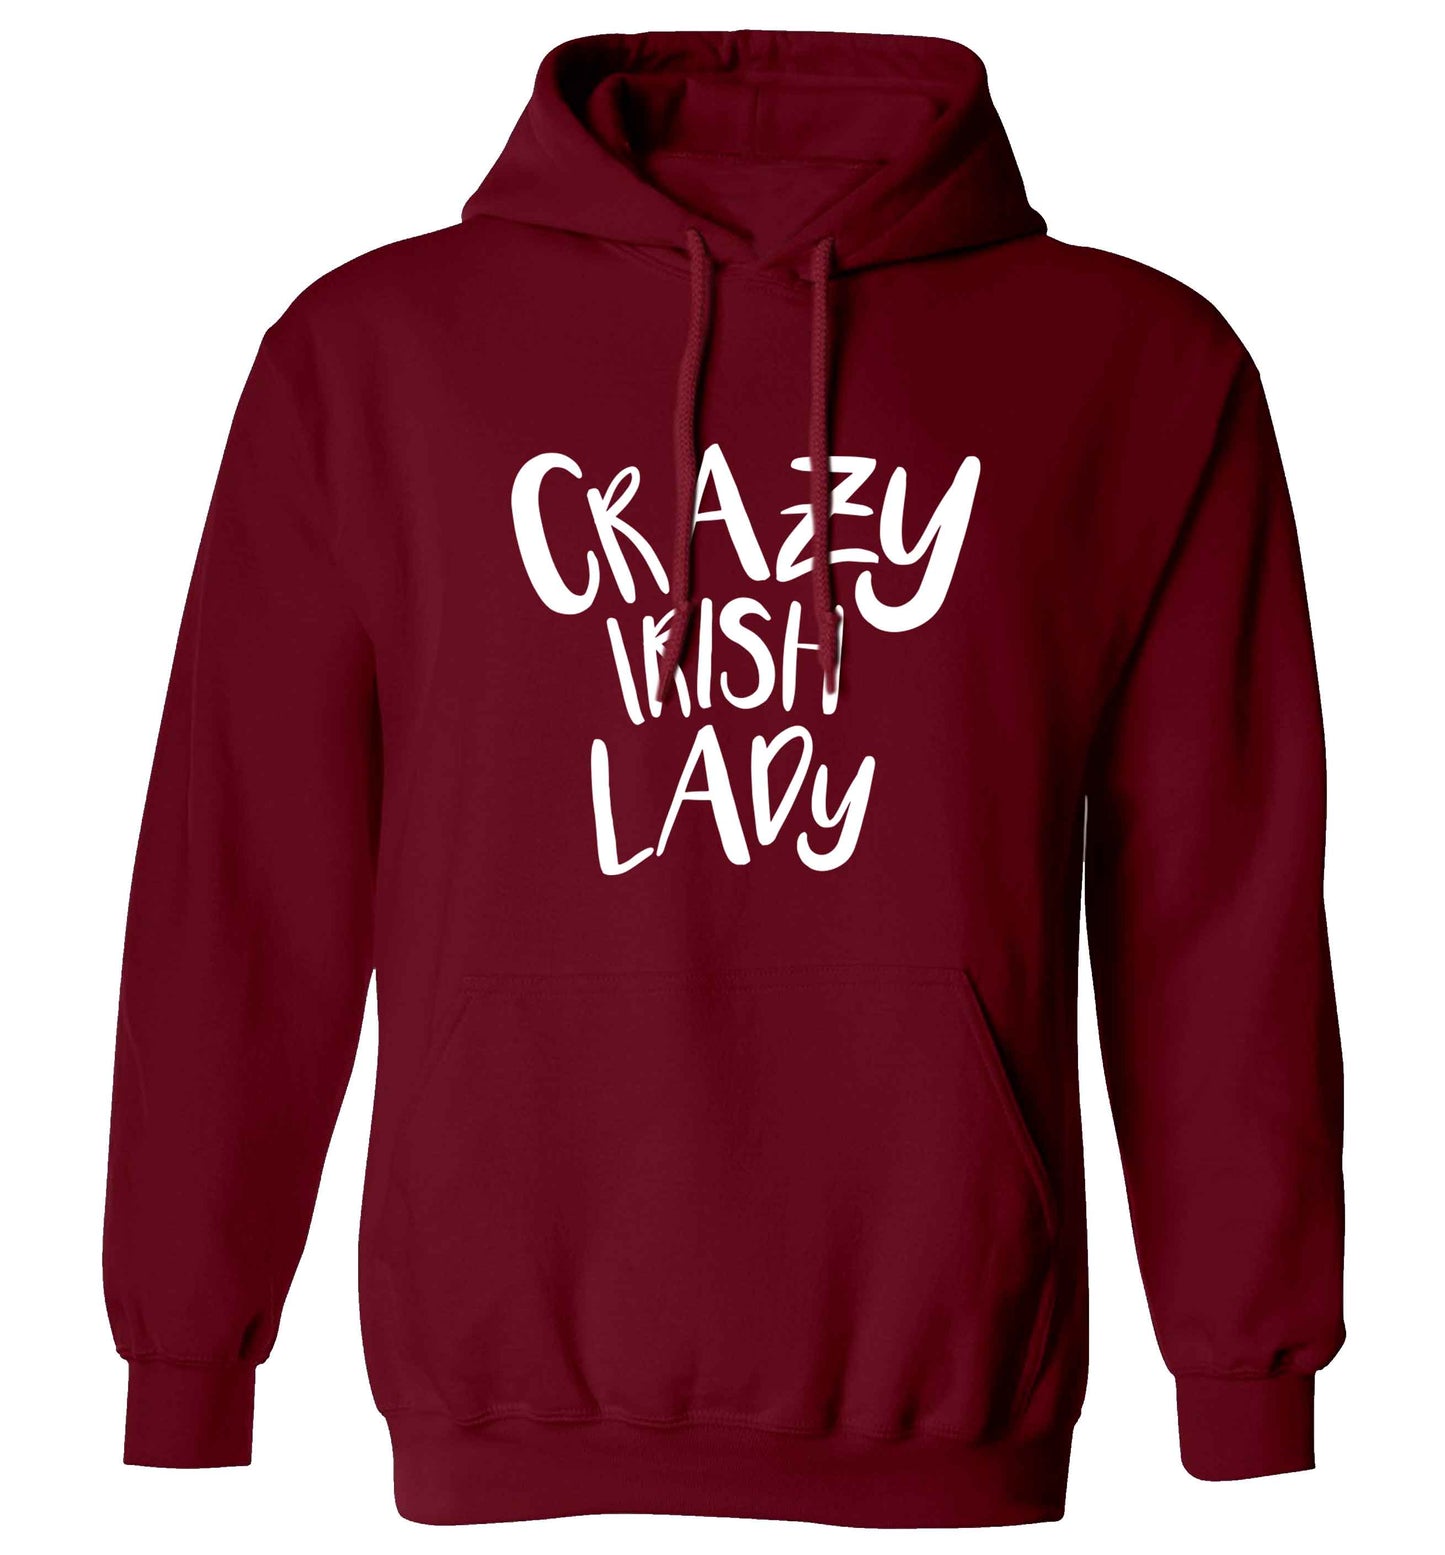 Crazy Irish lady adults unisex maroon hoodie 2XL